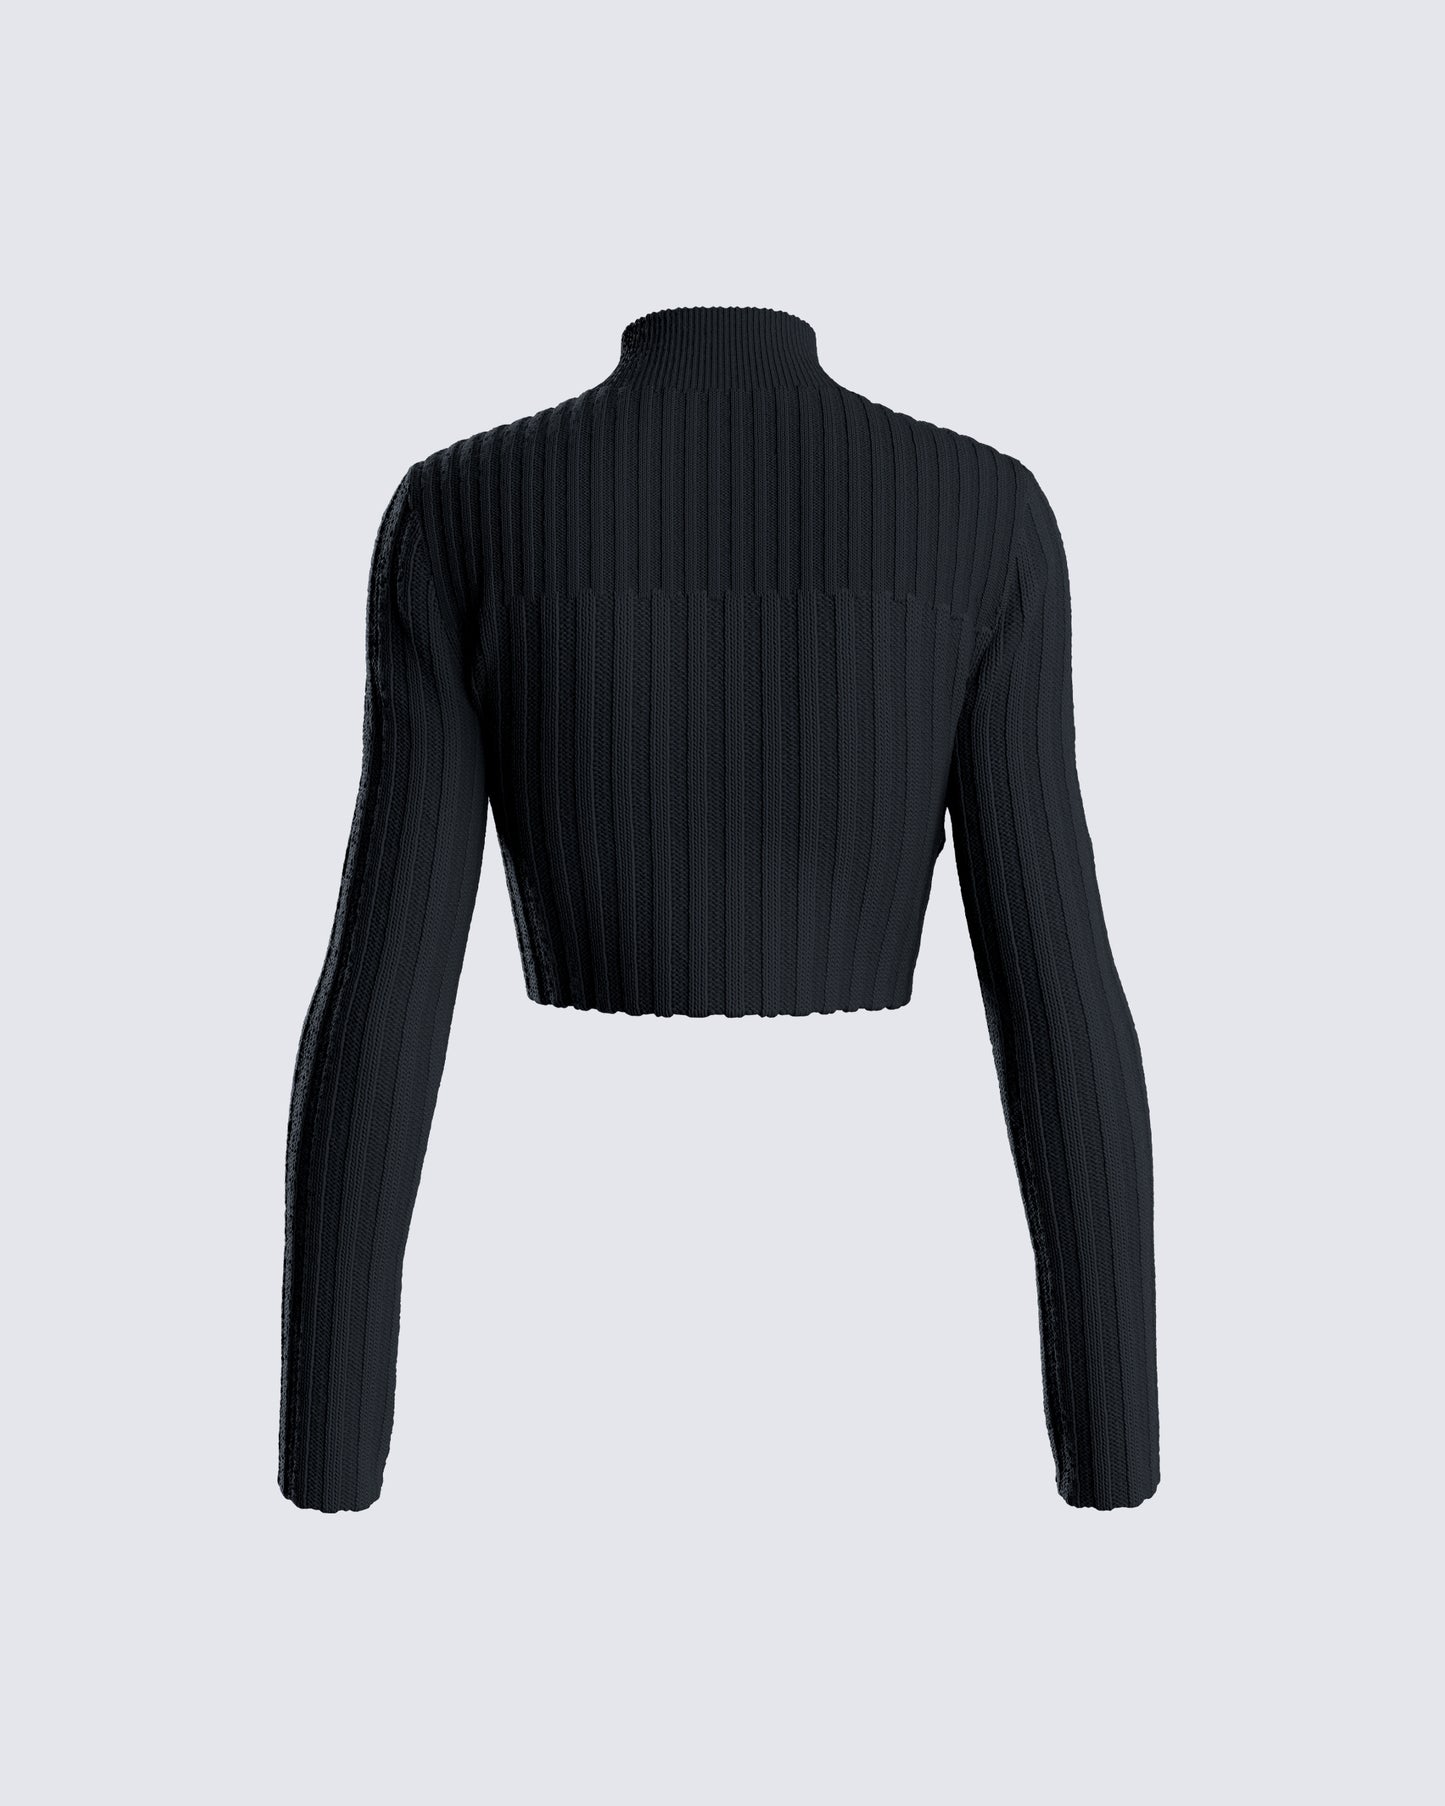 Travis Black Sweater Knit Top